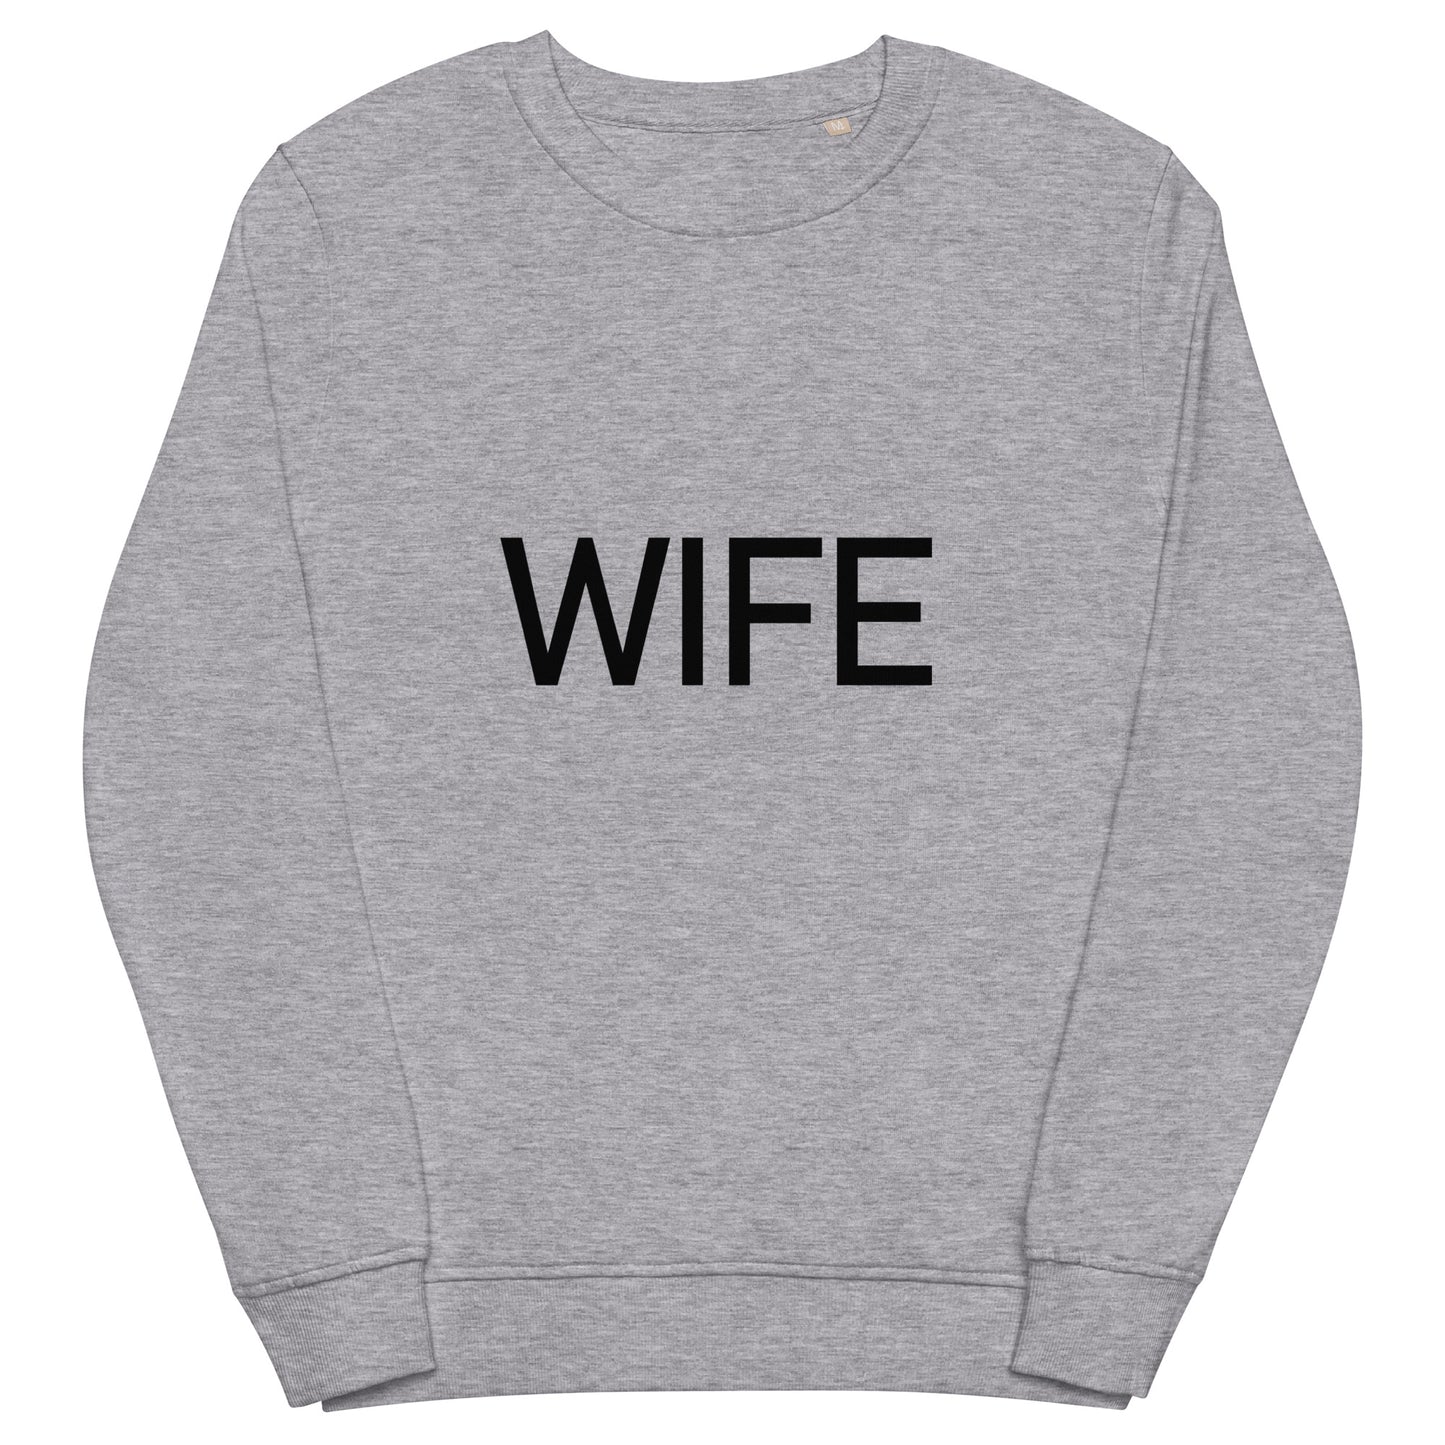 Wife - Sustainably Made Sweatshirt